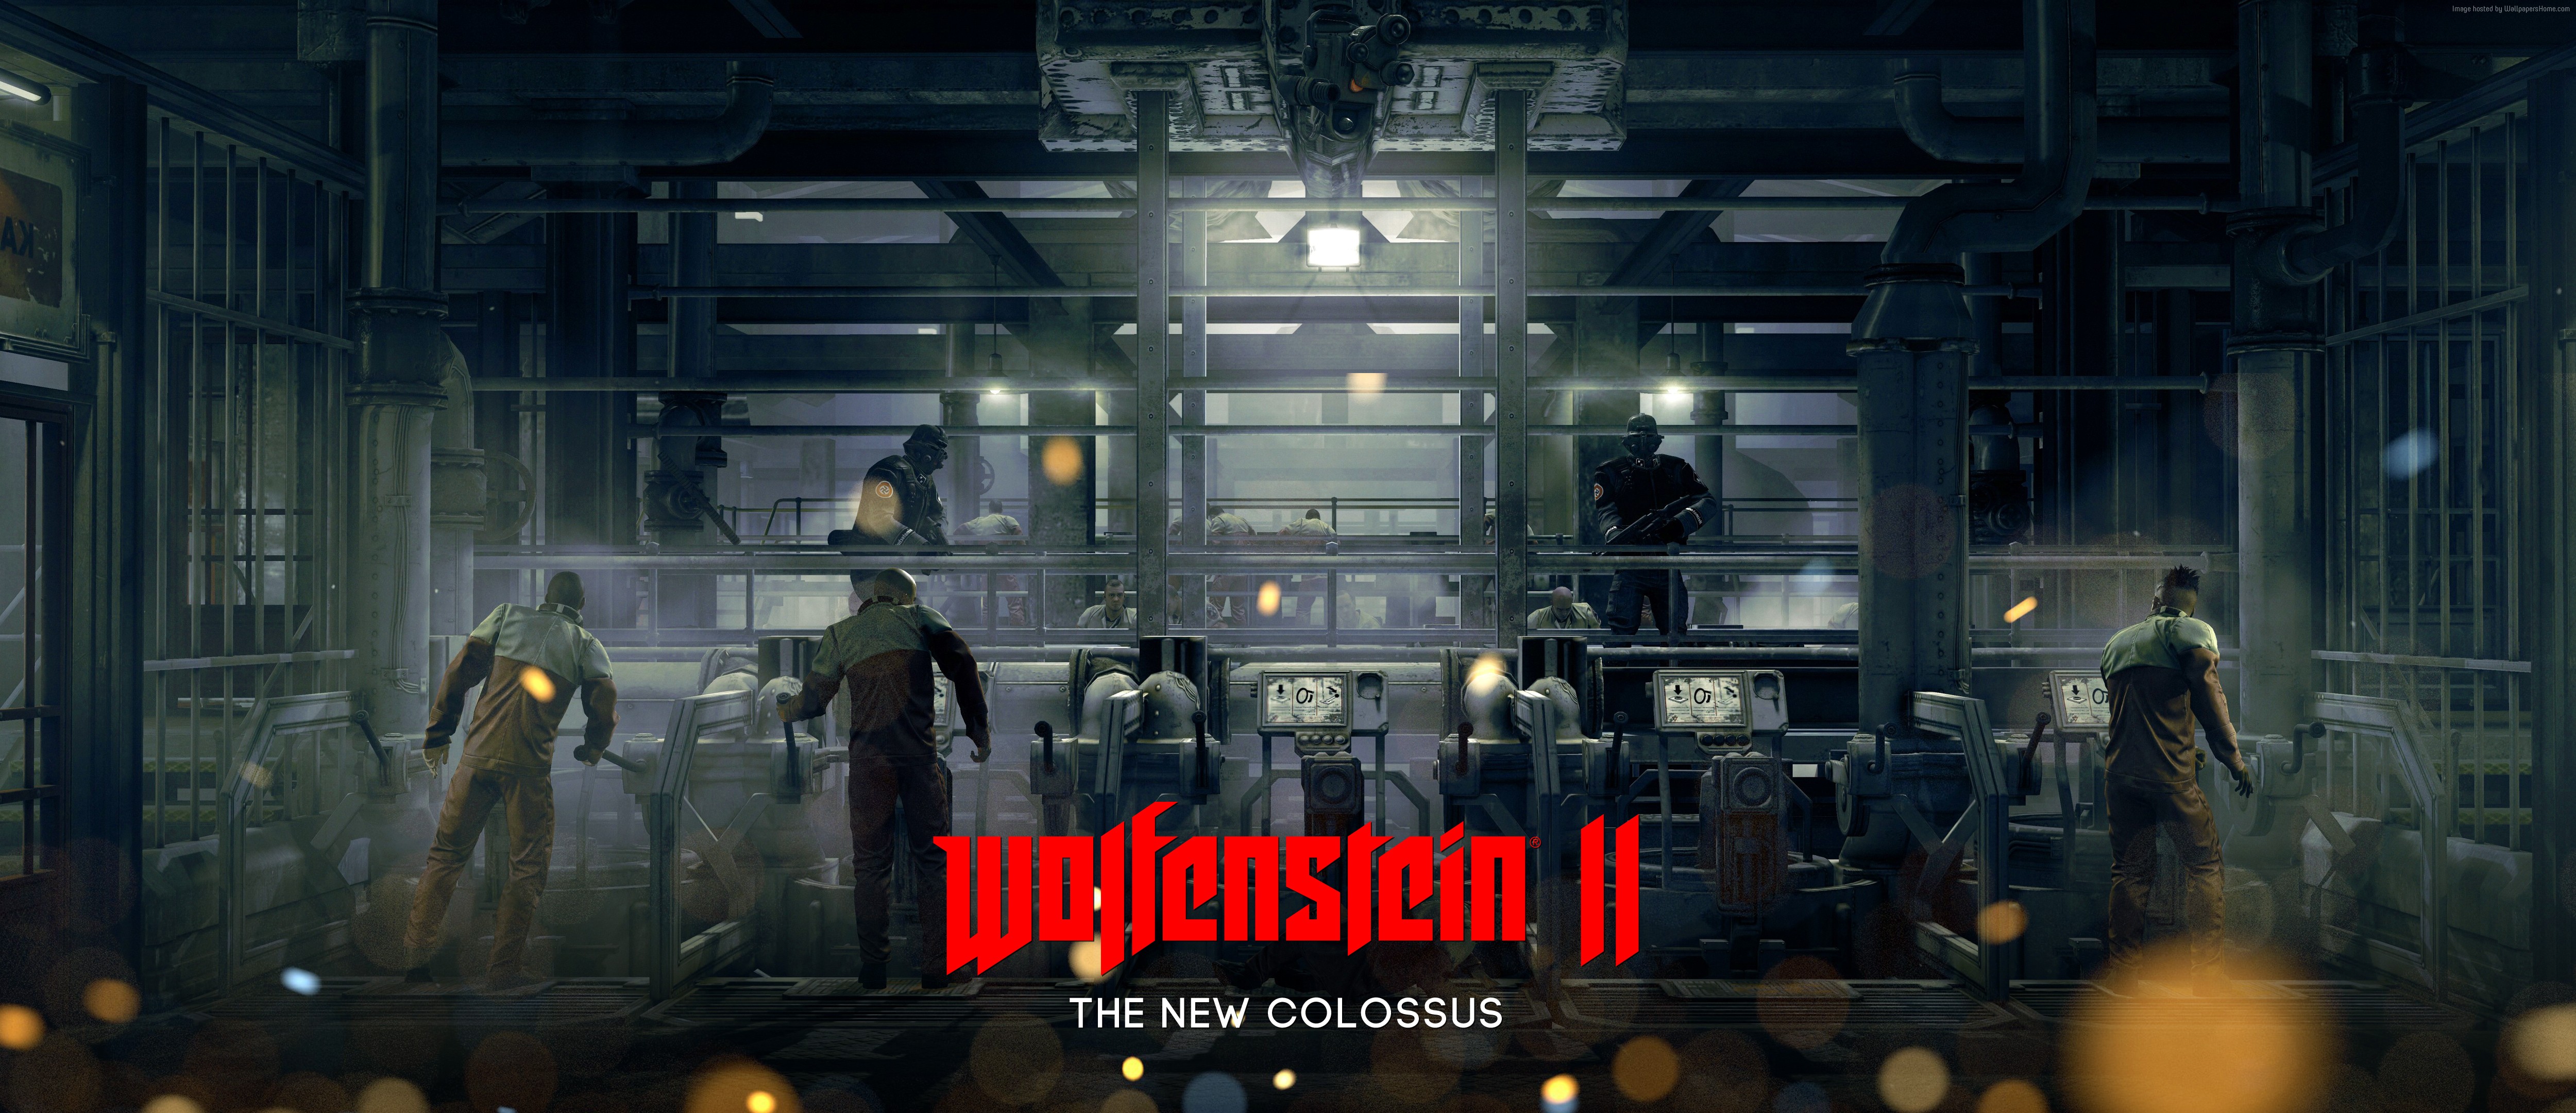 Wolfenstein Ii The New Colossus HD Wallpaper Background